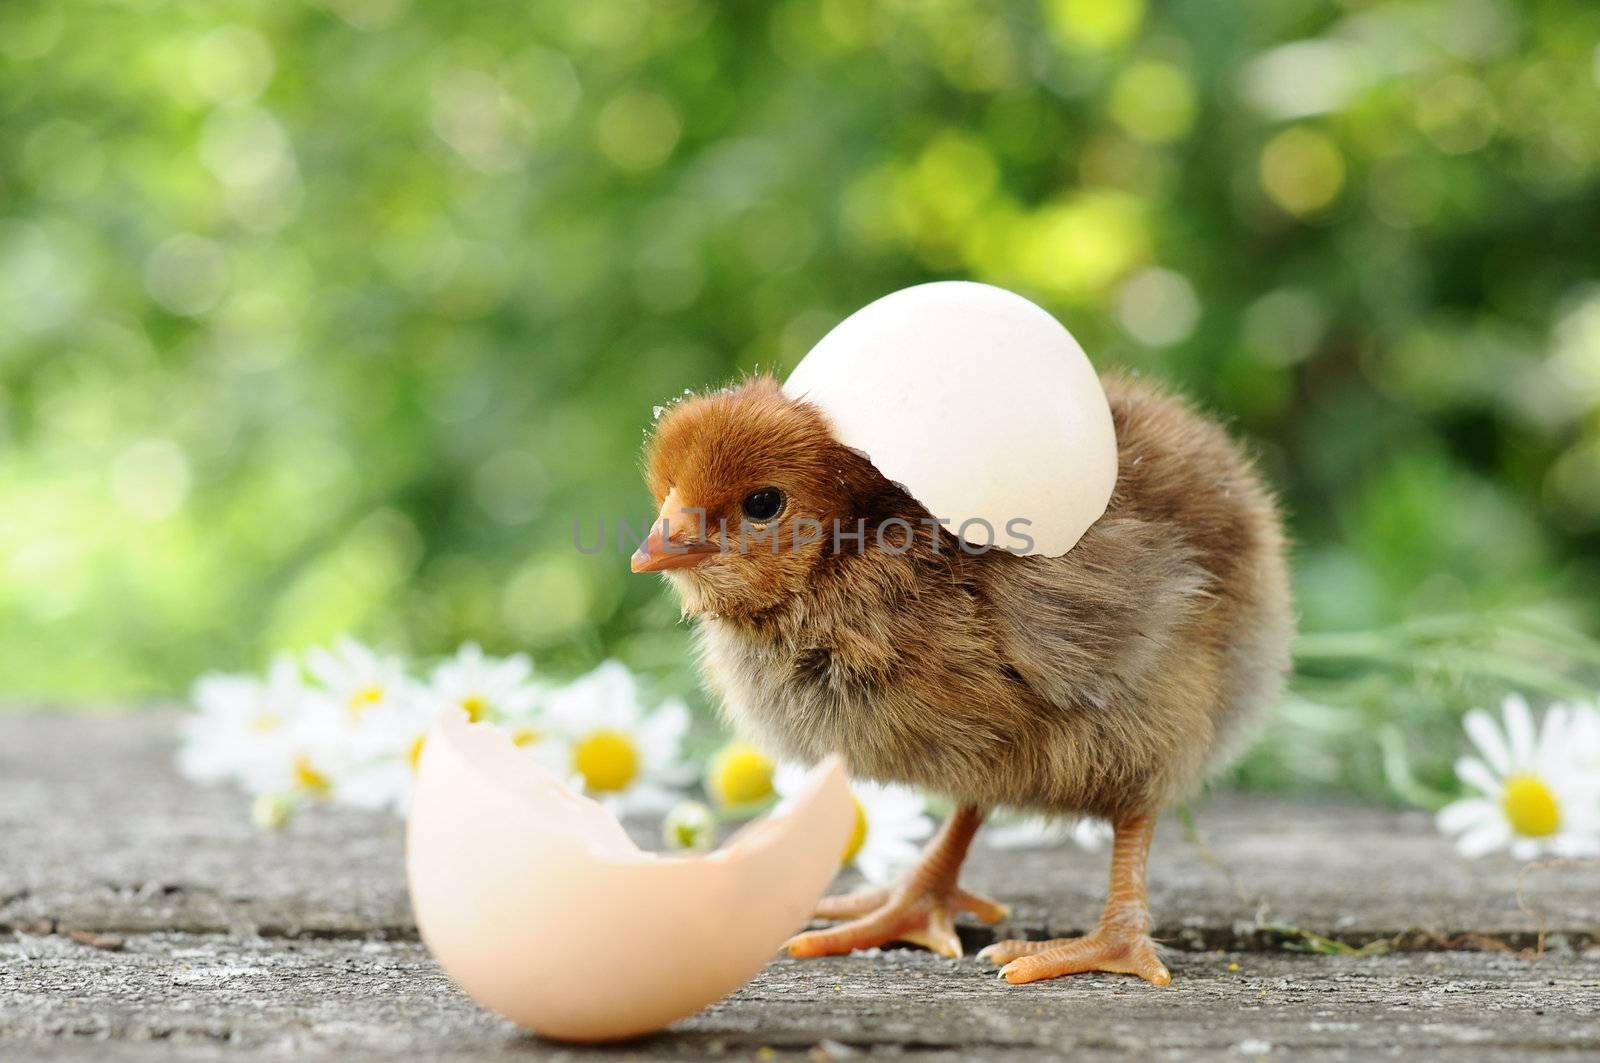 Small chicks and egg shells by olgavolodina